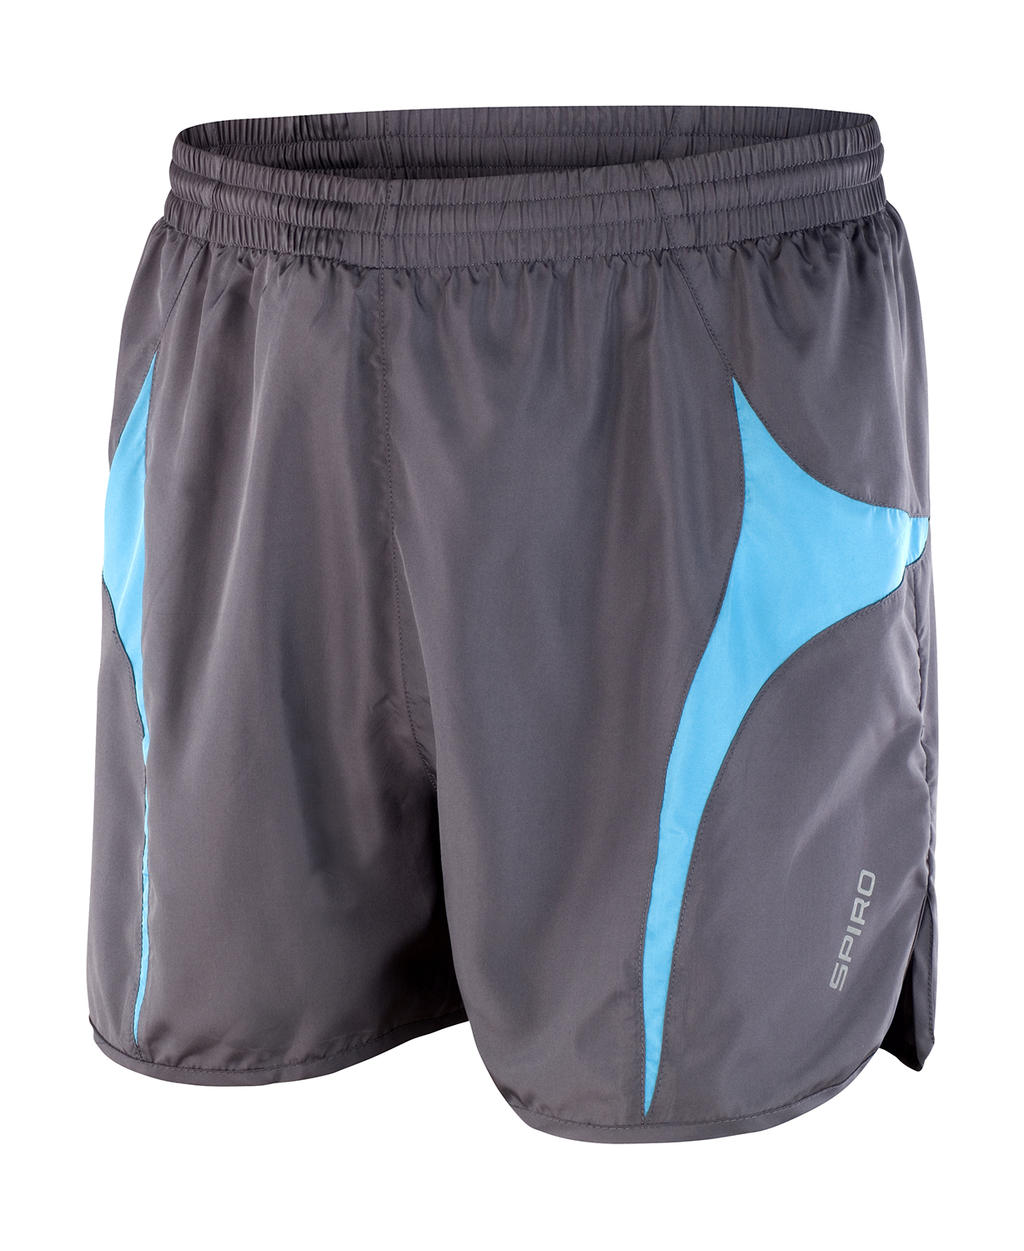  Unisex Micro Lite Running Shorts in Farbe Grey/Aqua